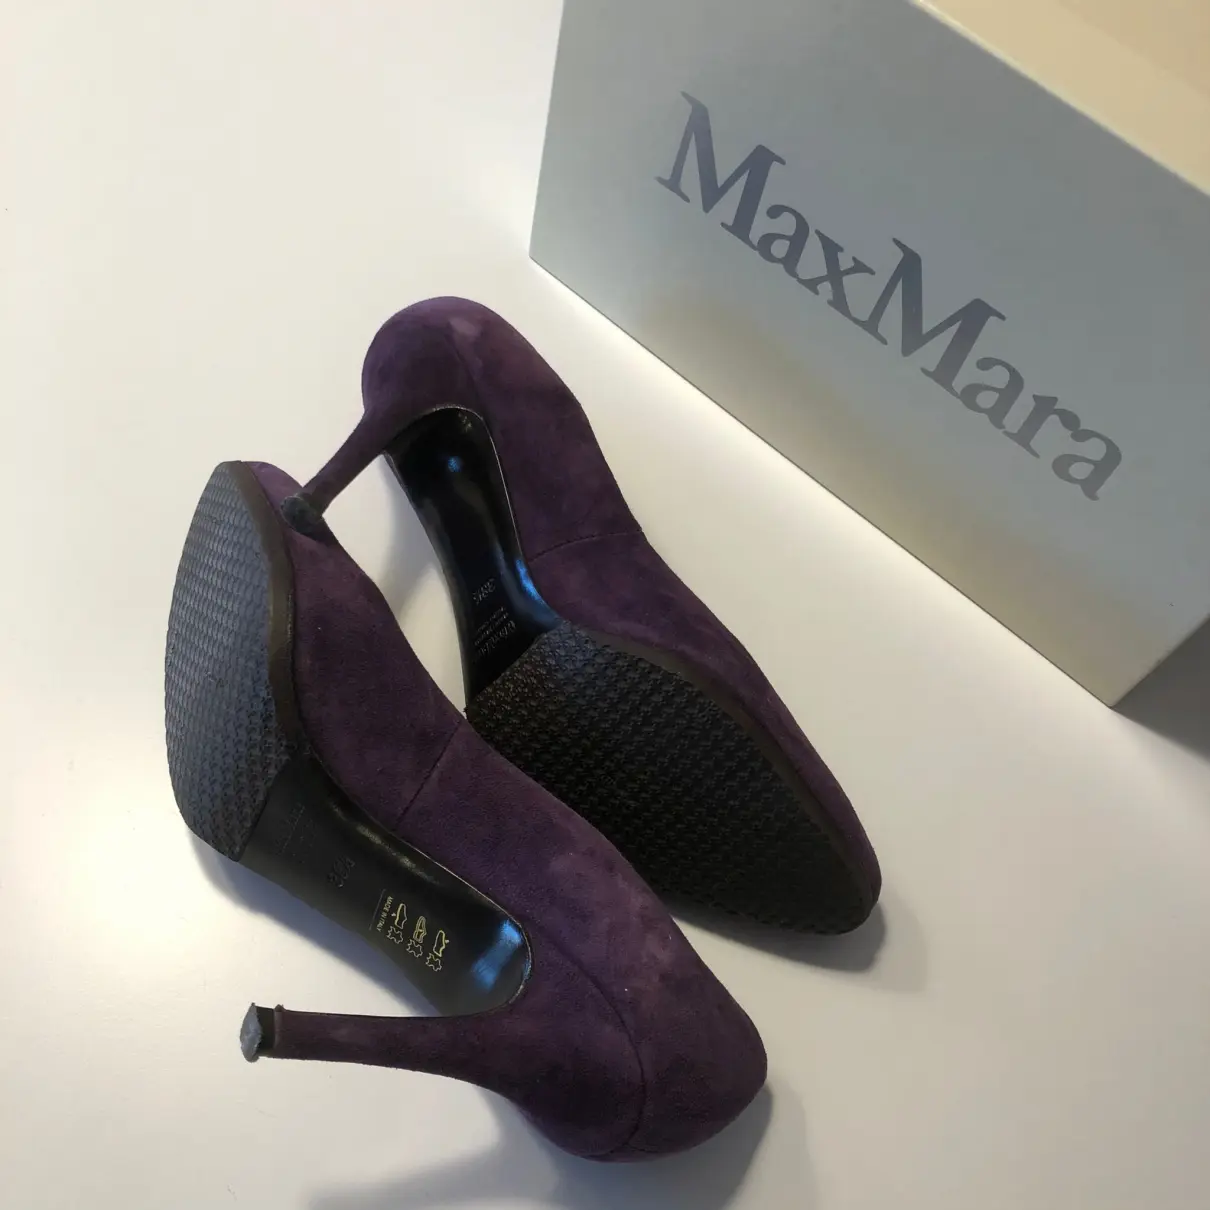 Buy Max Mara Max Mara Atelier heels online